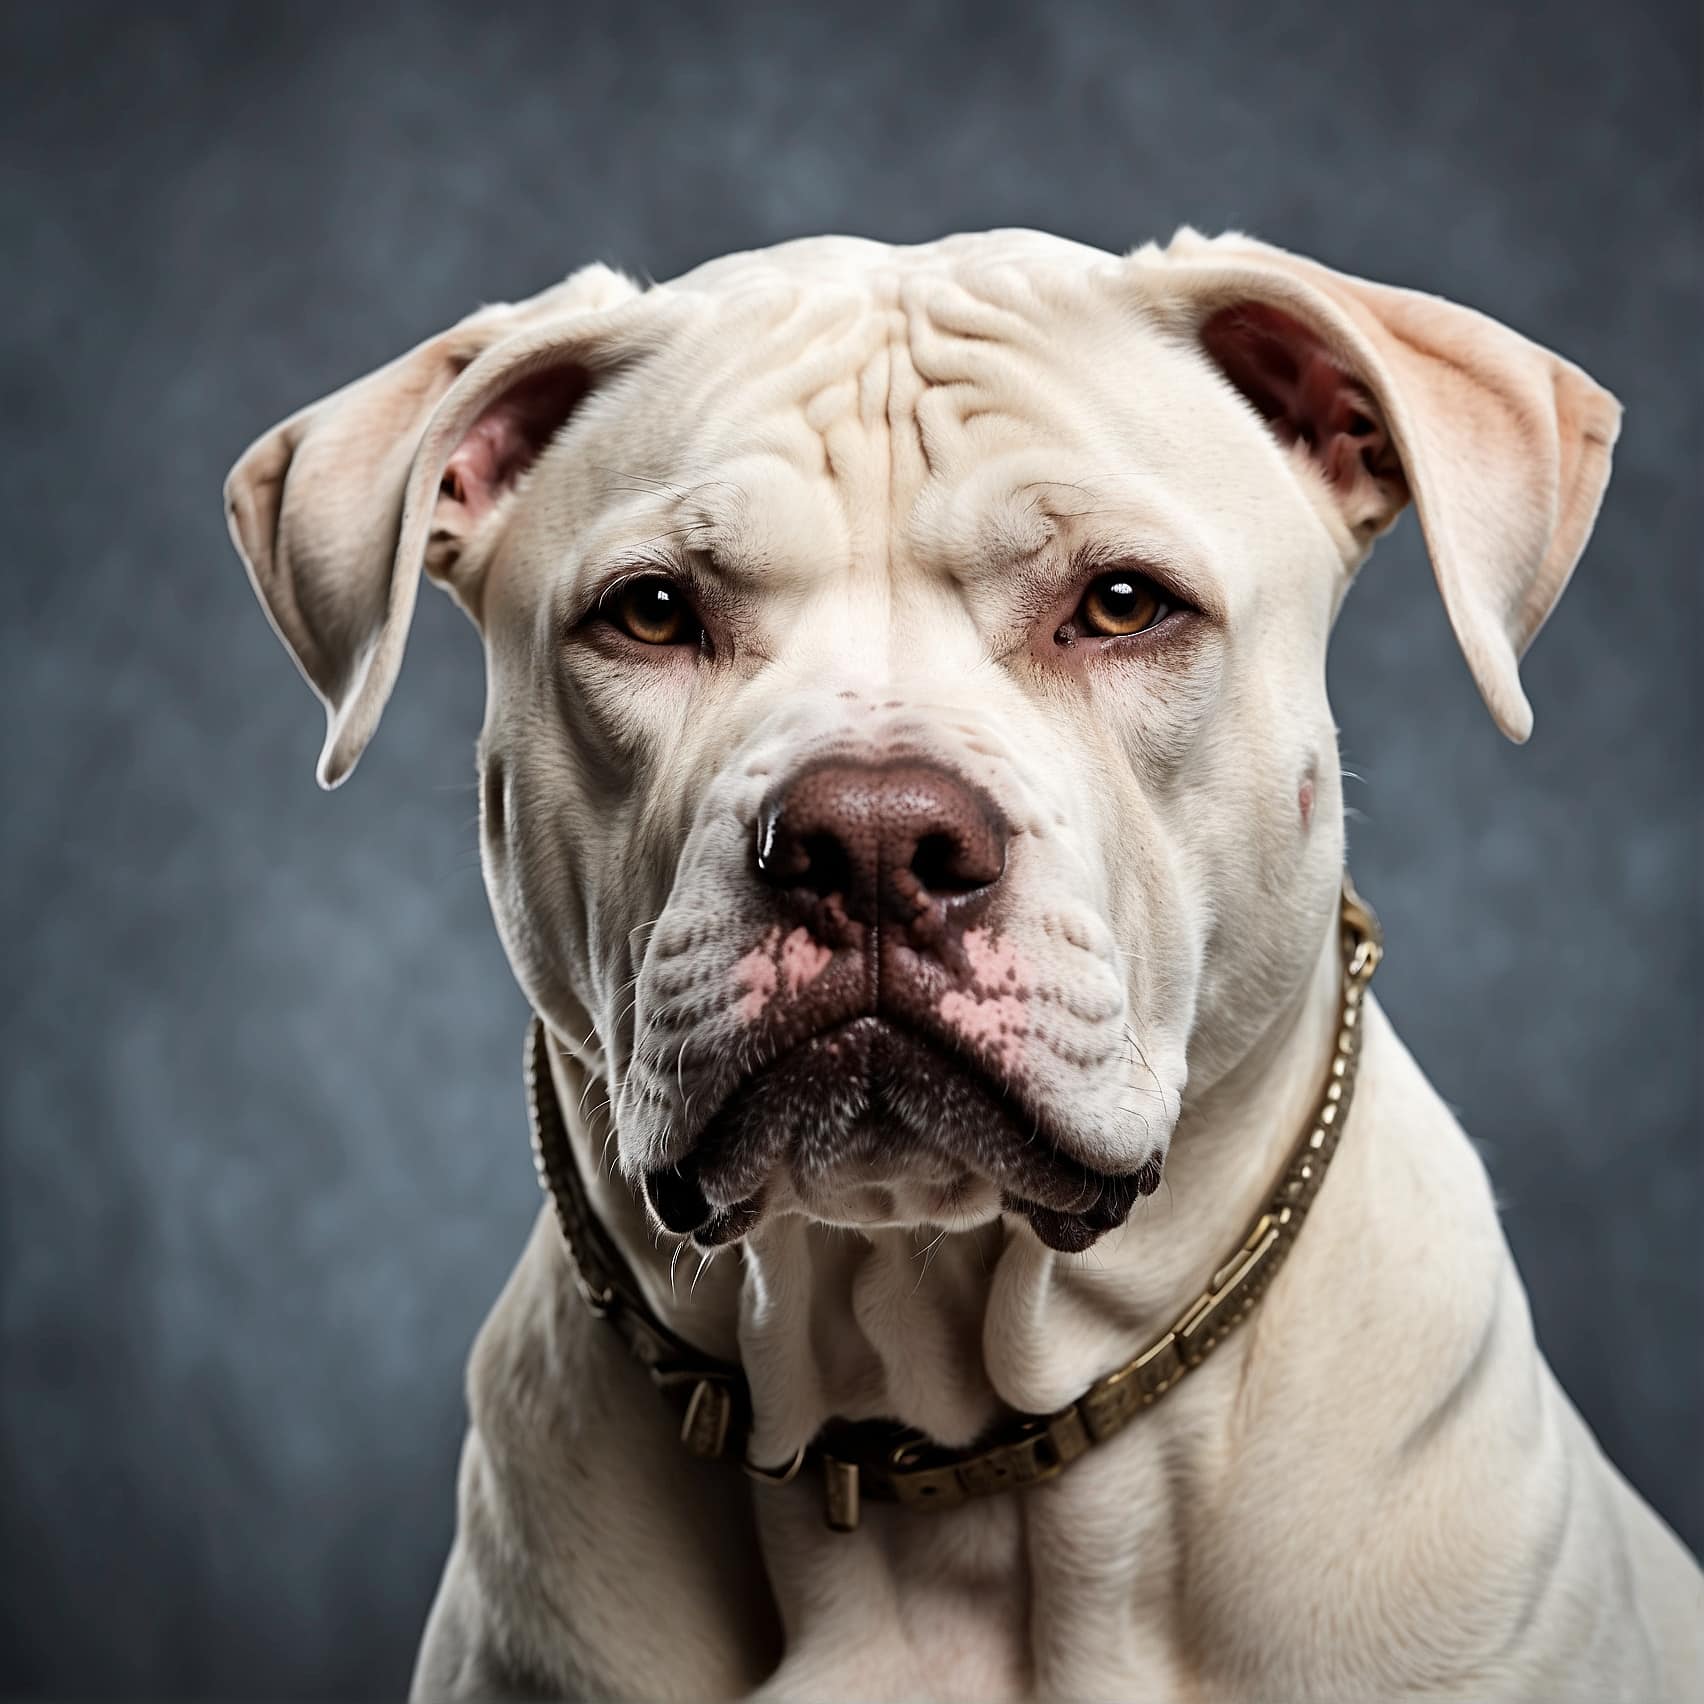 Argentinian Mastiff (Dogo Argentino) portrait headshot